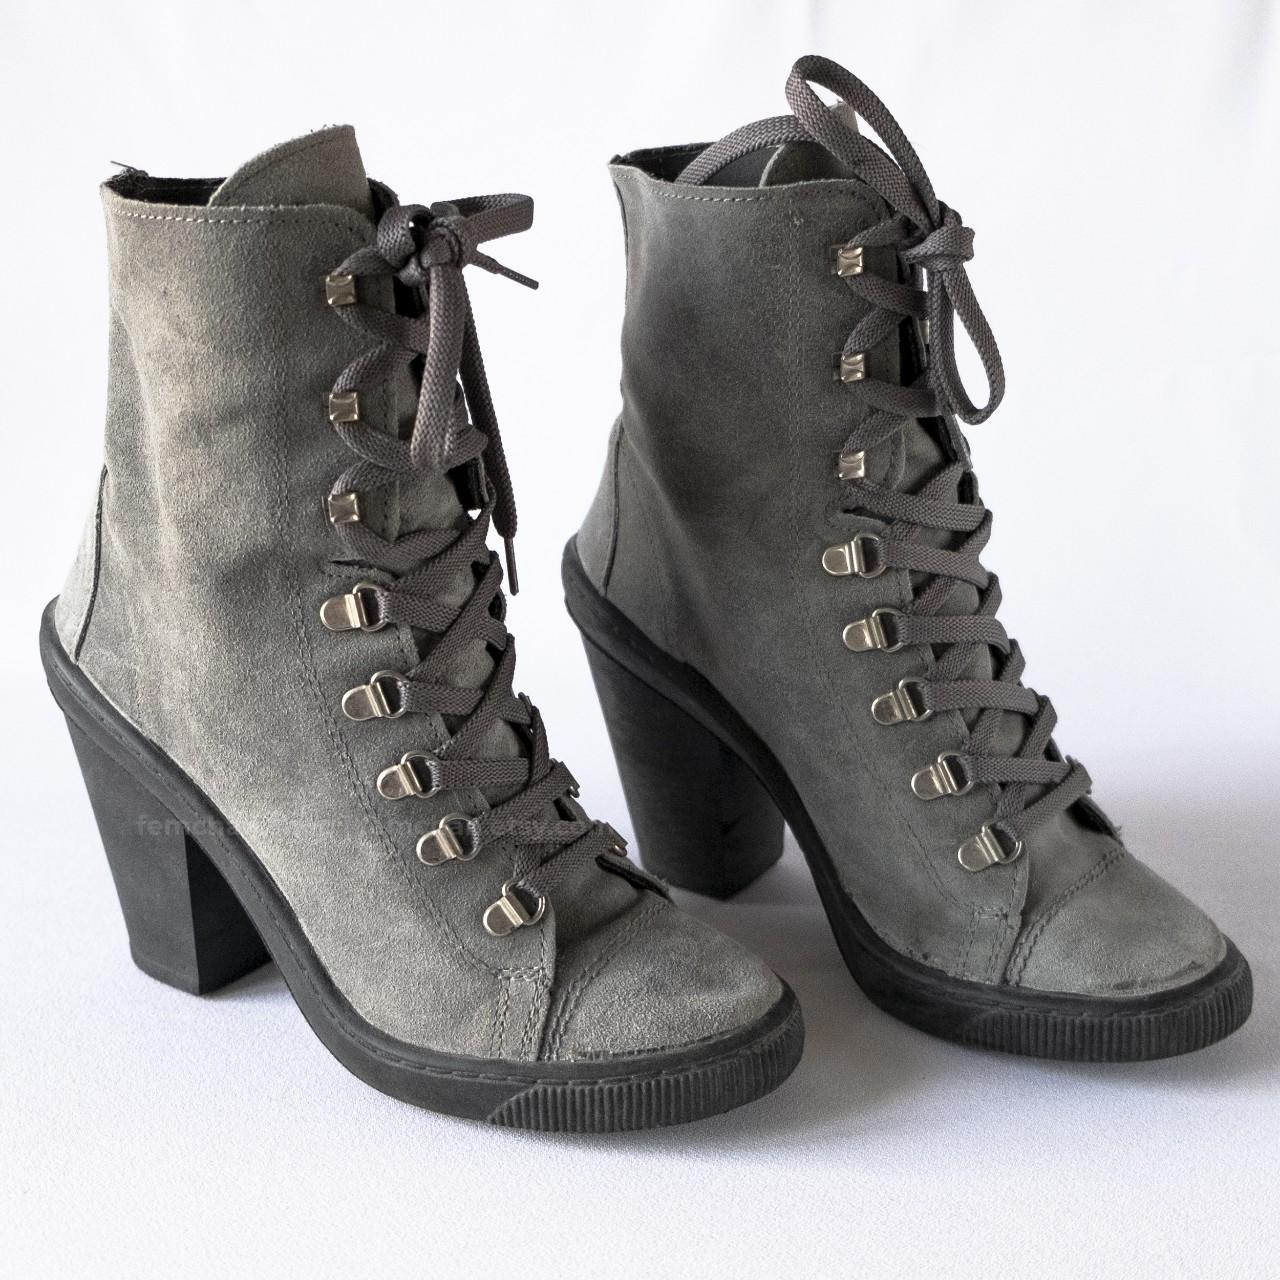 New Look Women's Grey and Black Boots | Depop